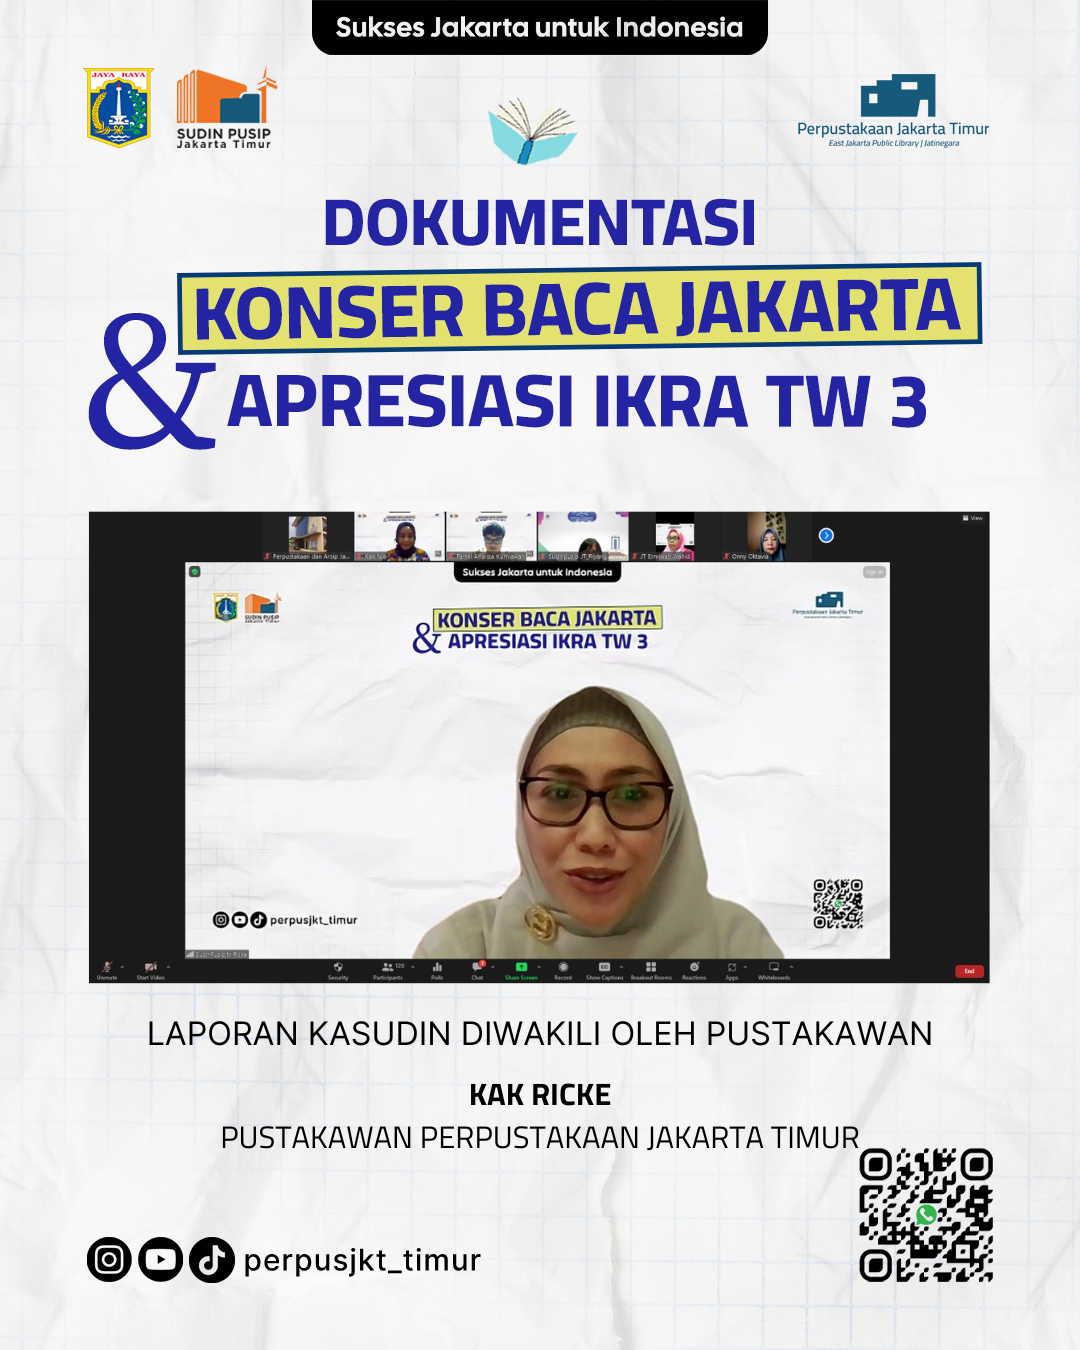 Konser Baca Jakarta Dan Apresiasi IKRA Triwulan 3 Kota Administrasi Jakarta Timur